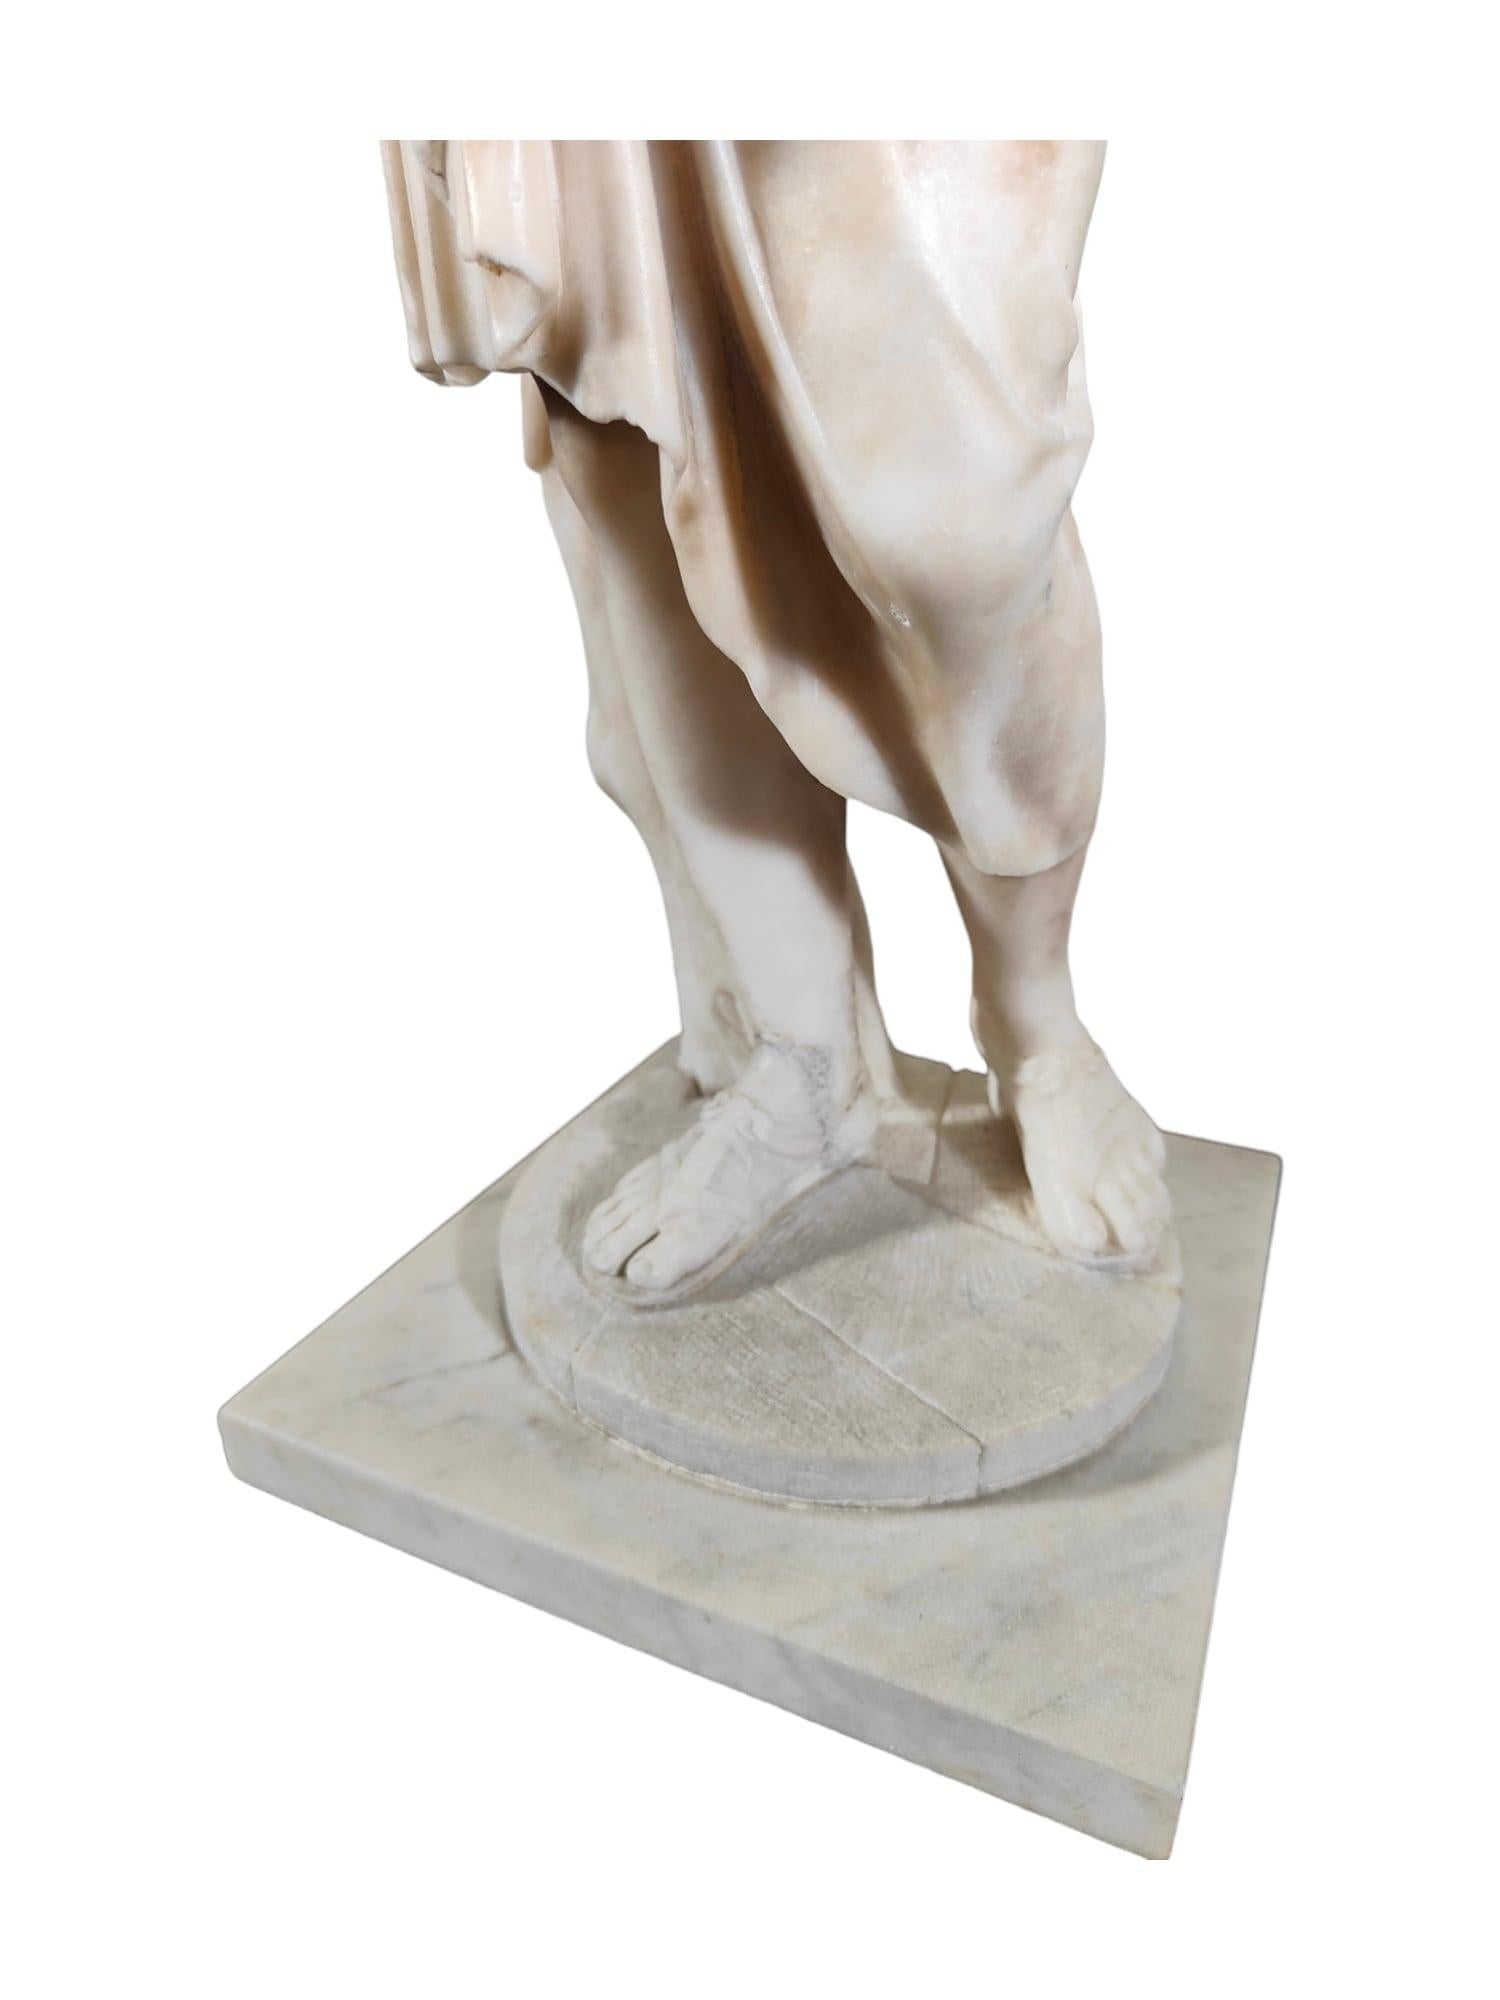 Diana de Gabios marble sculpture 19th century For Sale 1